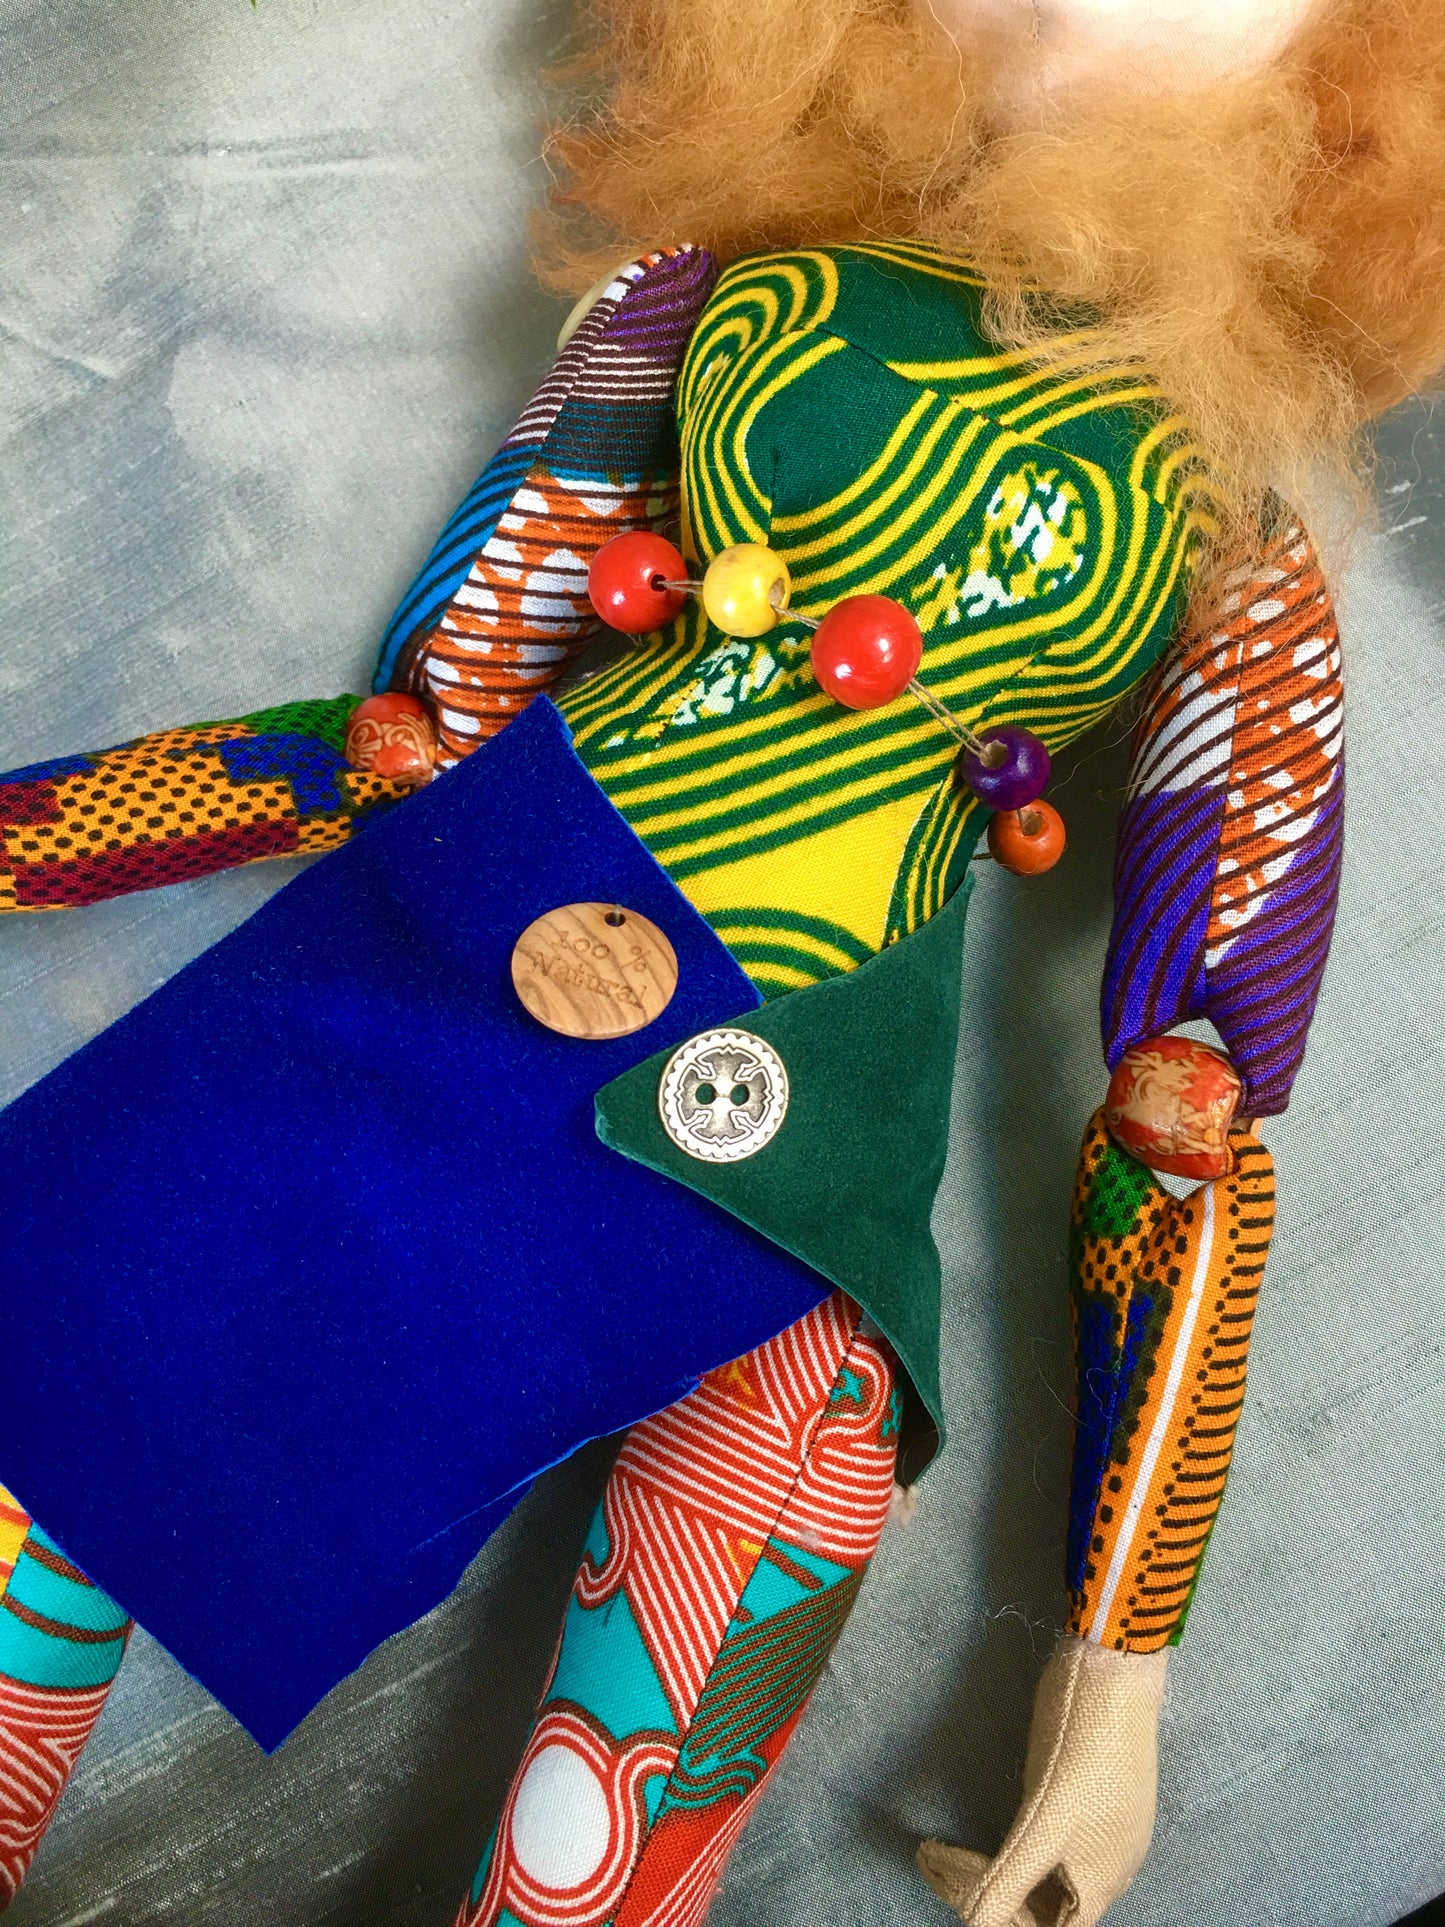 KIARA - SAFARI GIRL doll made by Jan Horrox